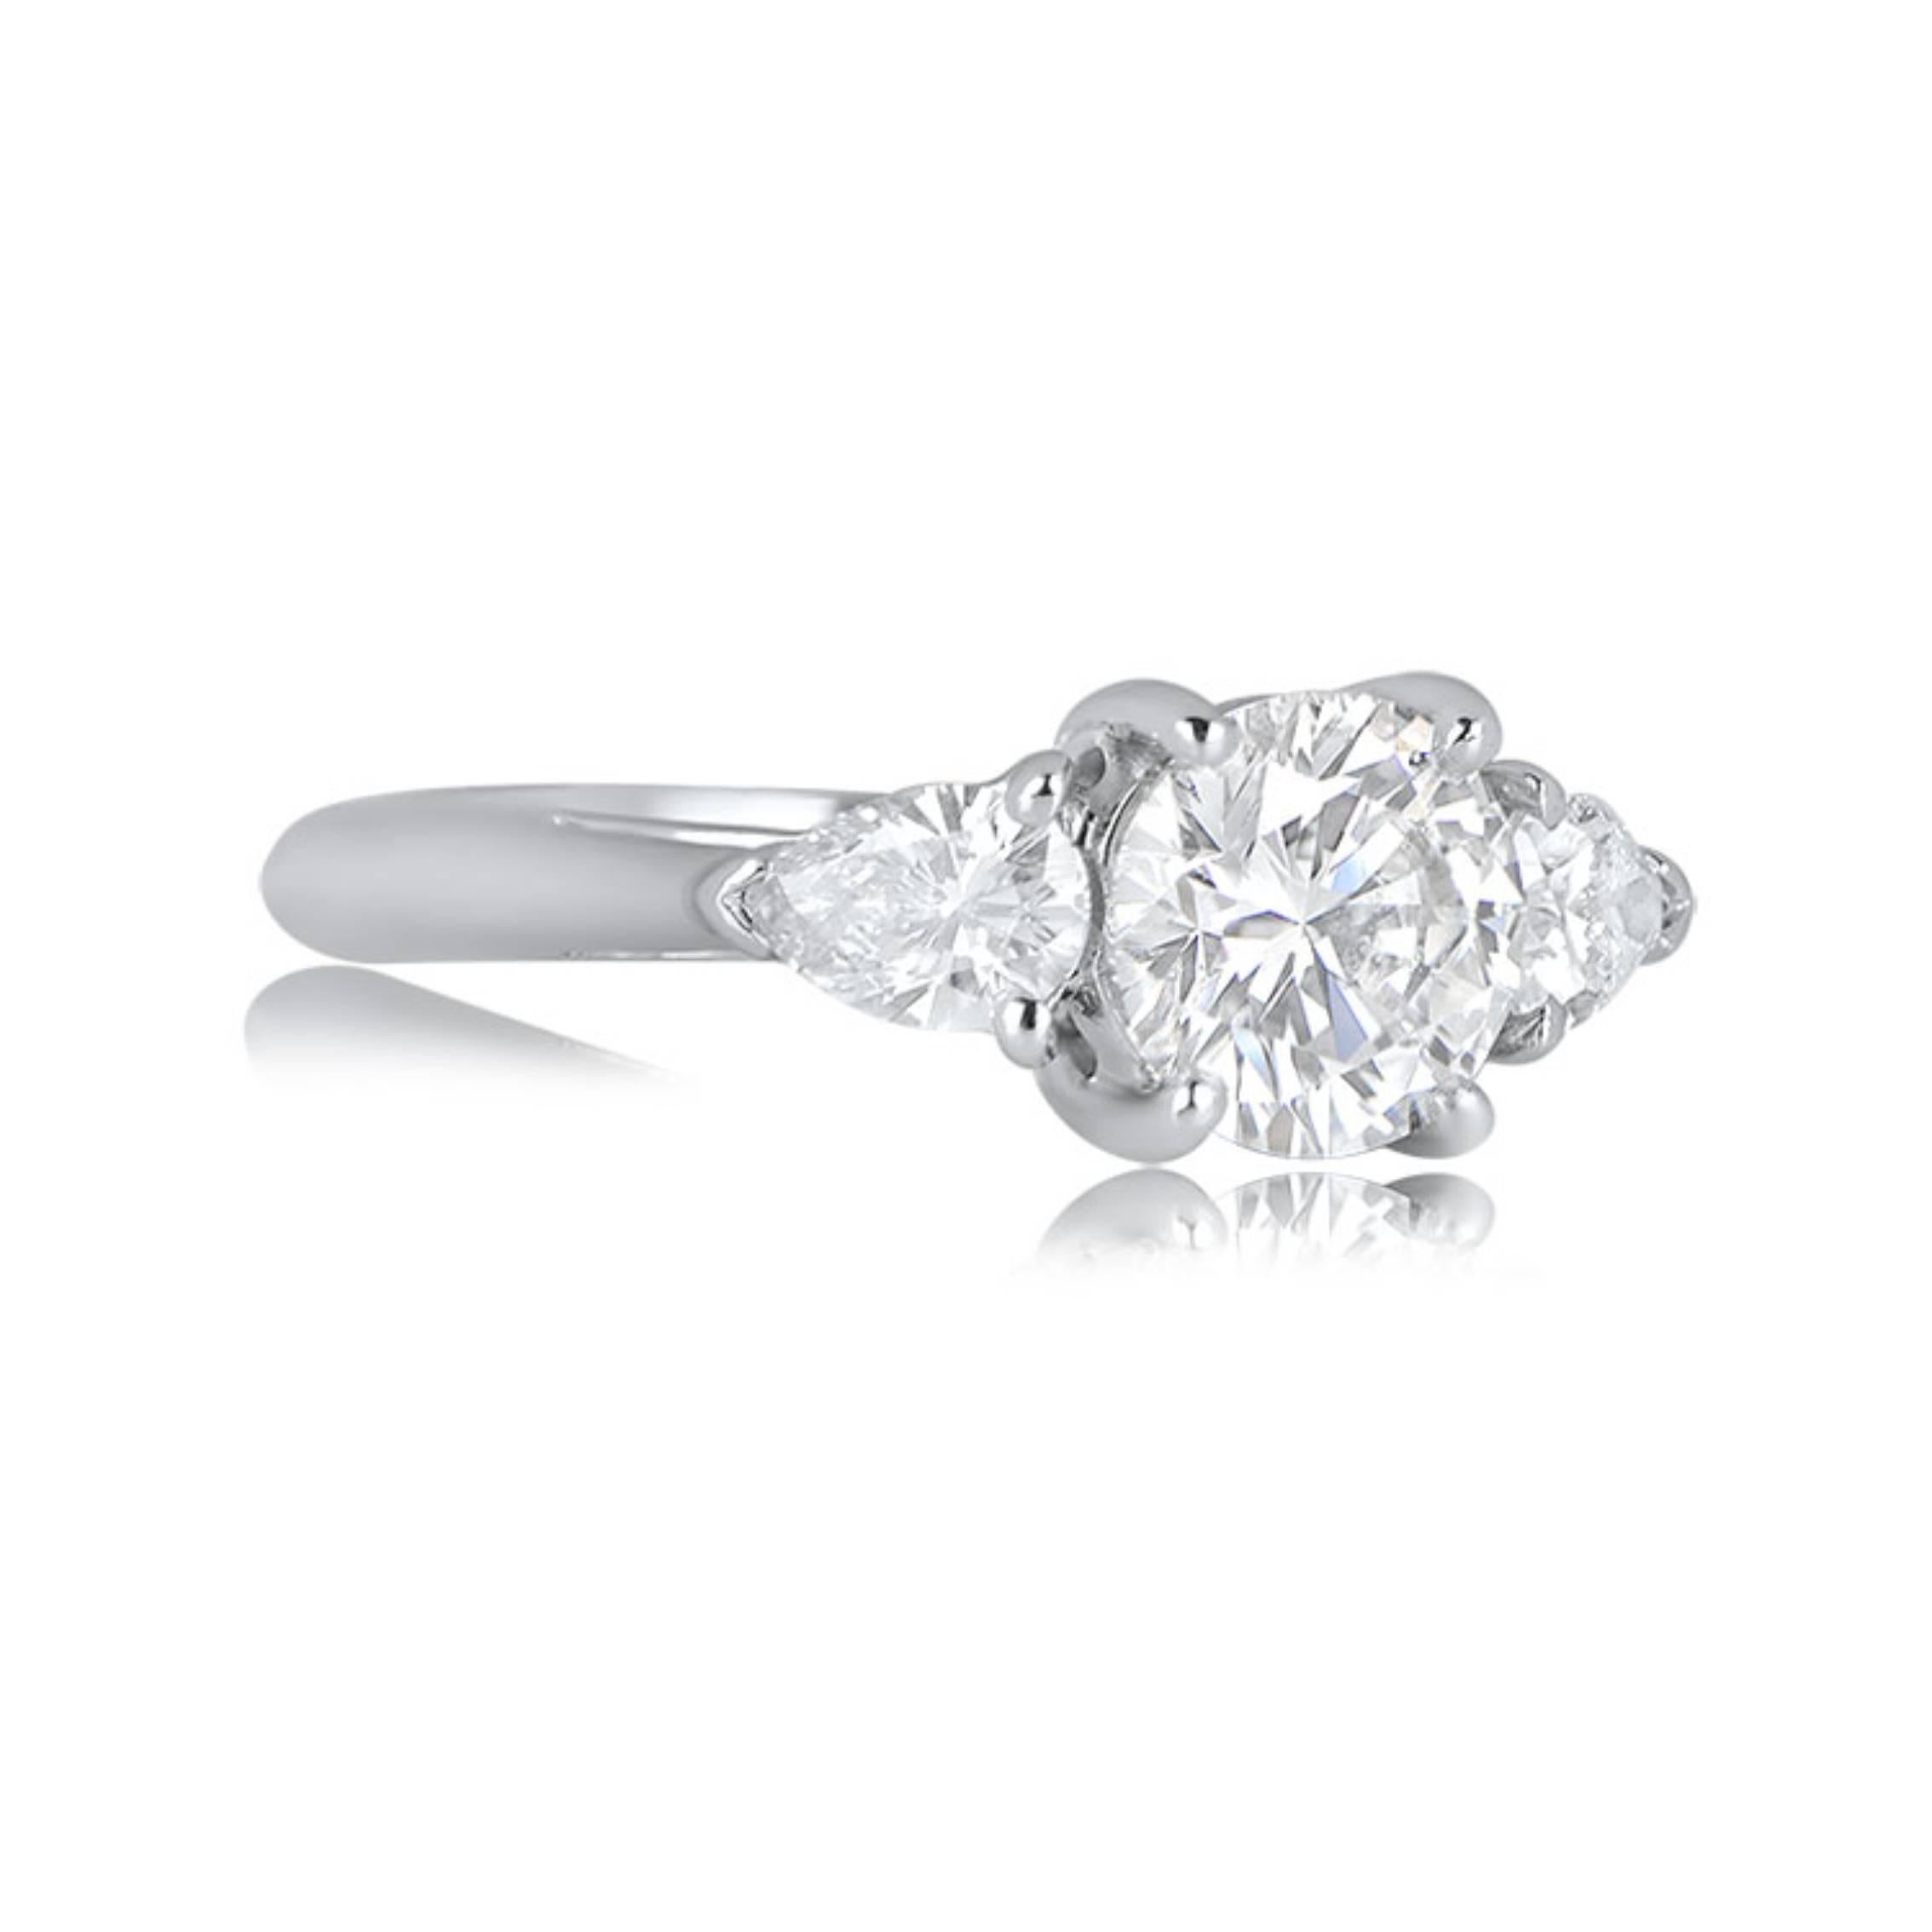 Art Deco Tiffany & Co. 1.04ct Brilliant Cut Diamond Engagement Ring, G Color, Platinum